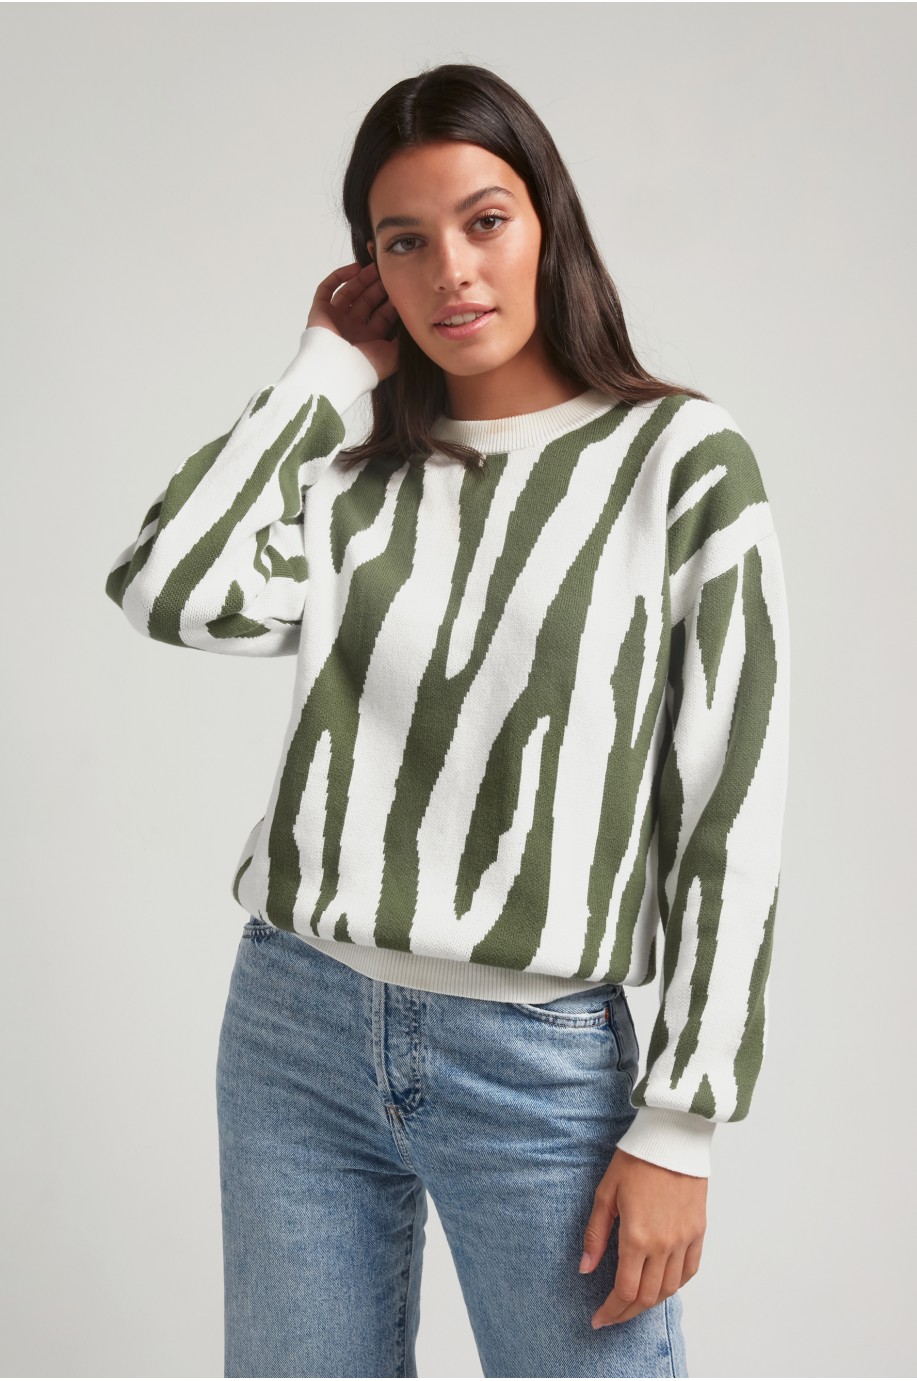 Urban Jungle Sweater